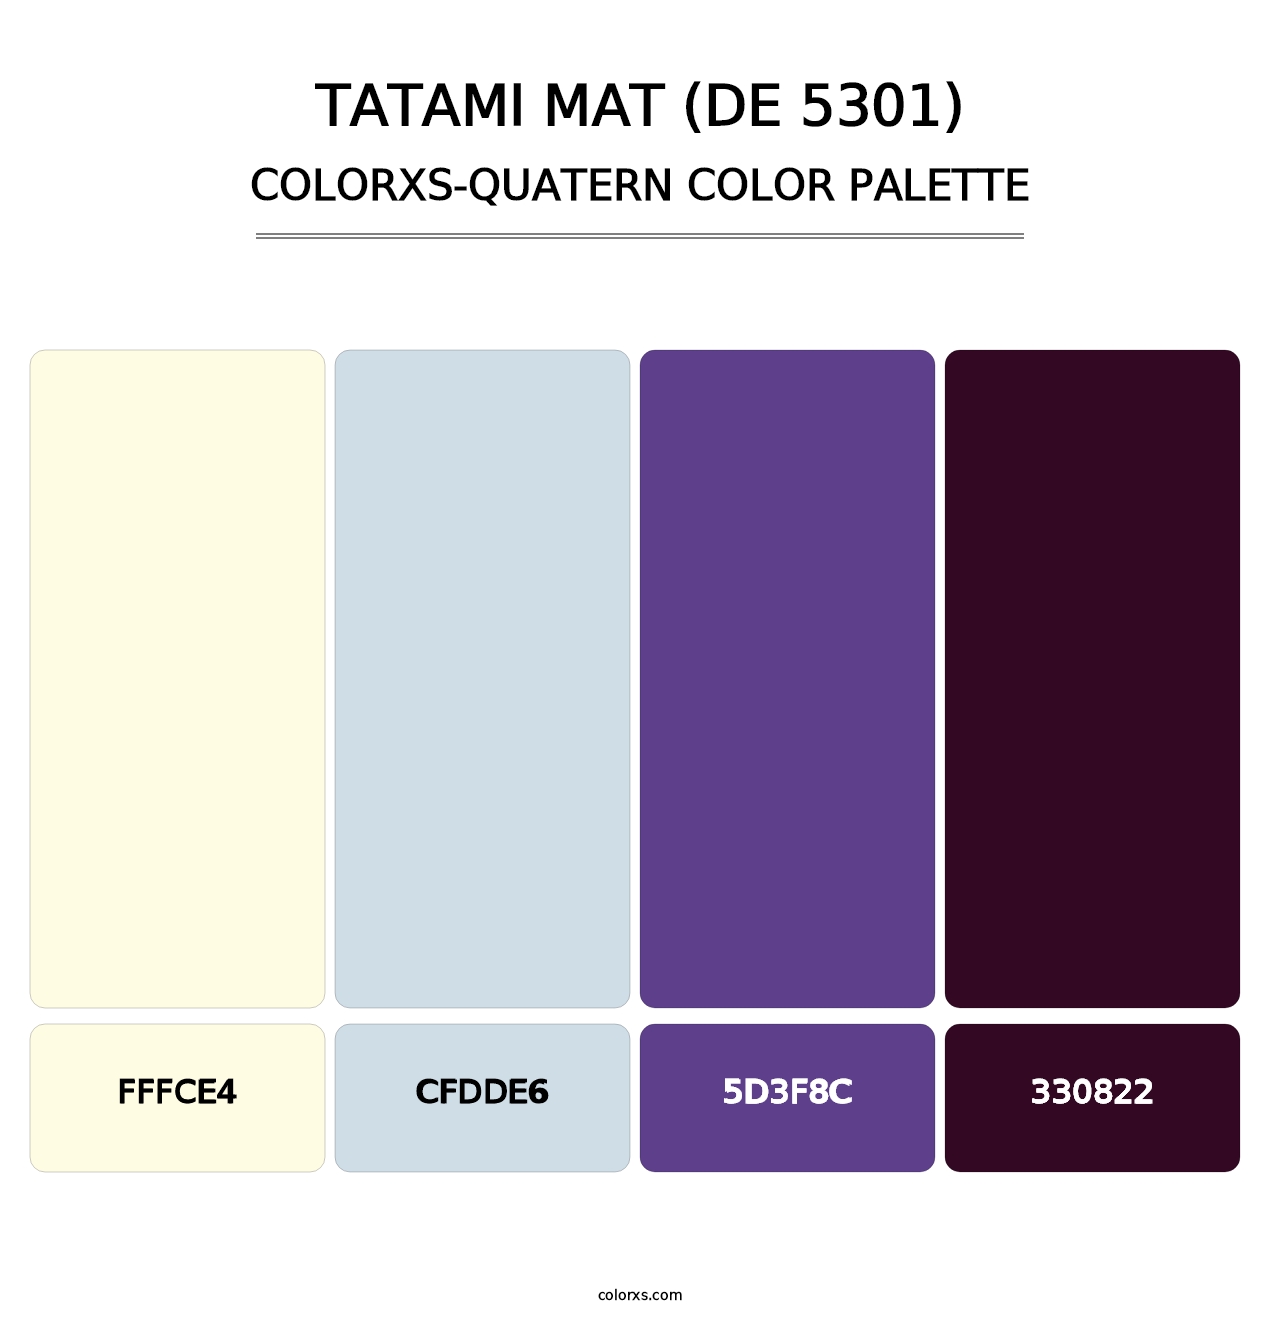 Tatami Mat (DE 5301) - Colorxs Quatern Palette